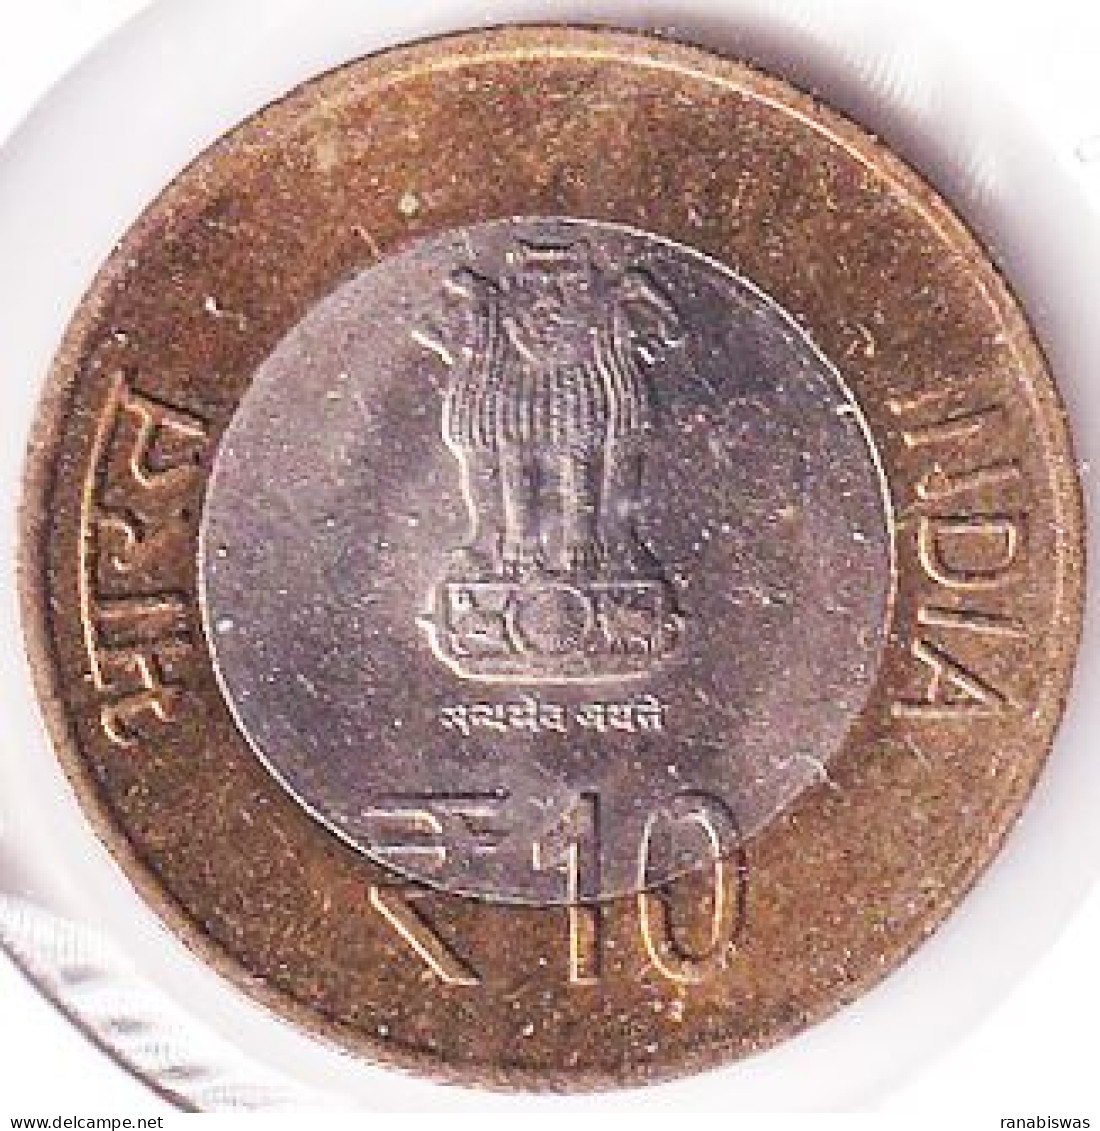 INDIA COIN LOT 447, 10 RUPEES 2012, MATA VAISHNO DEVI, HYDERABAD MINT, UNC - India